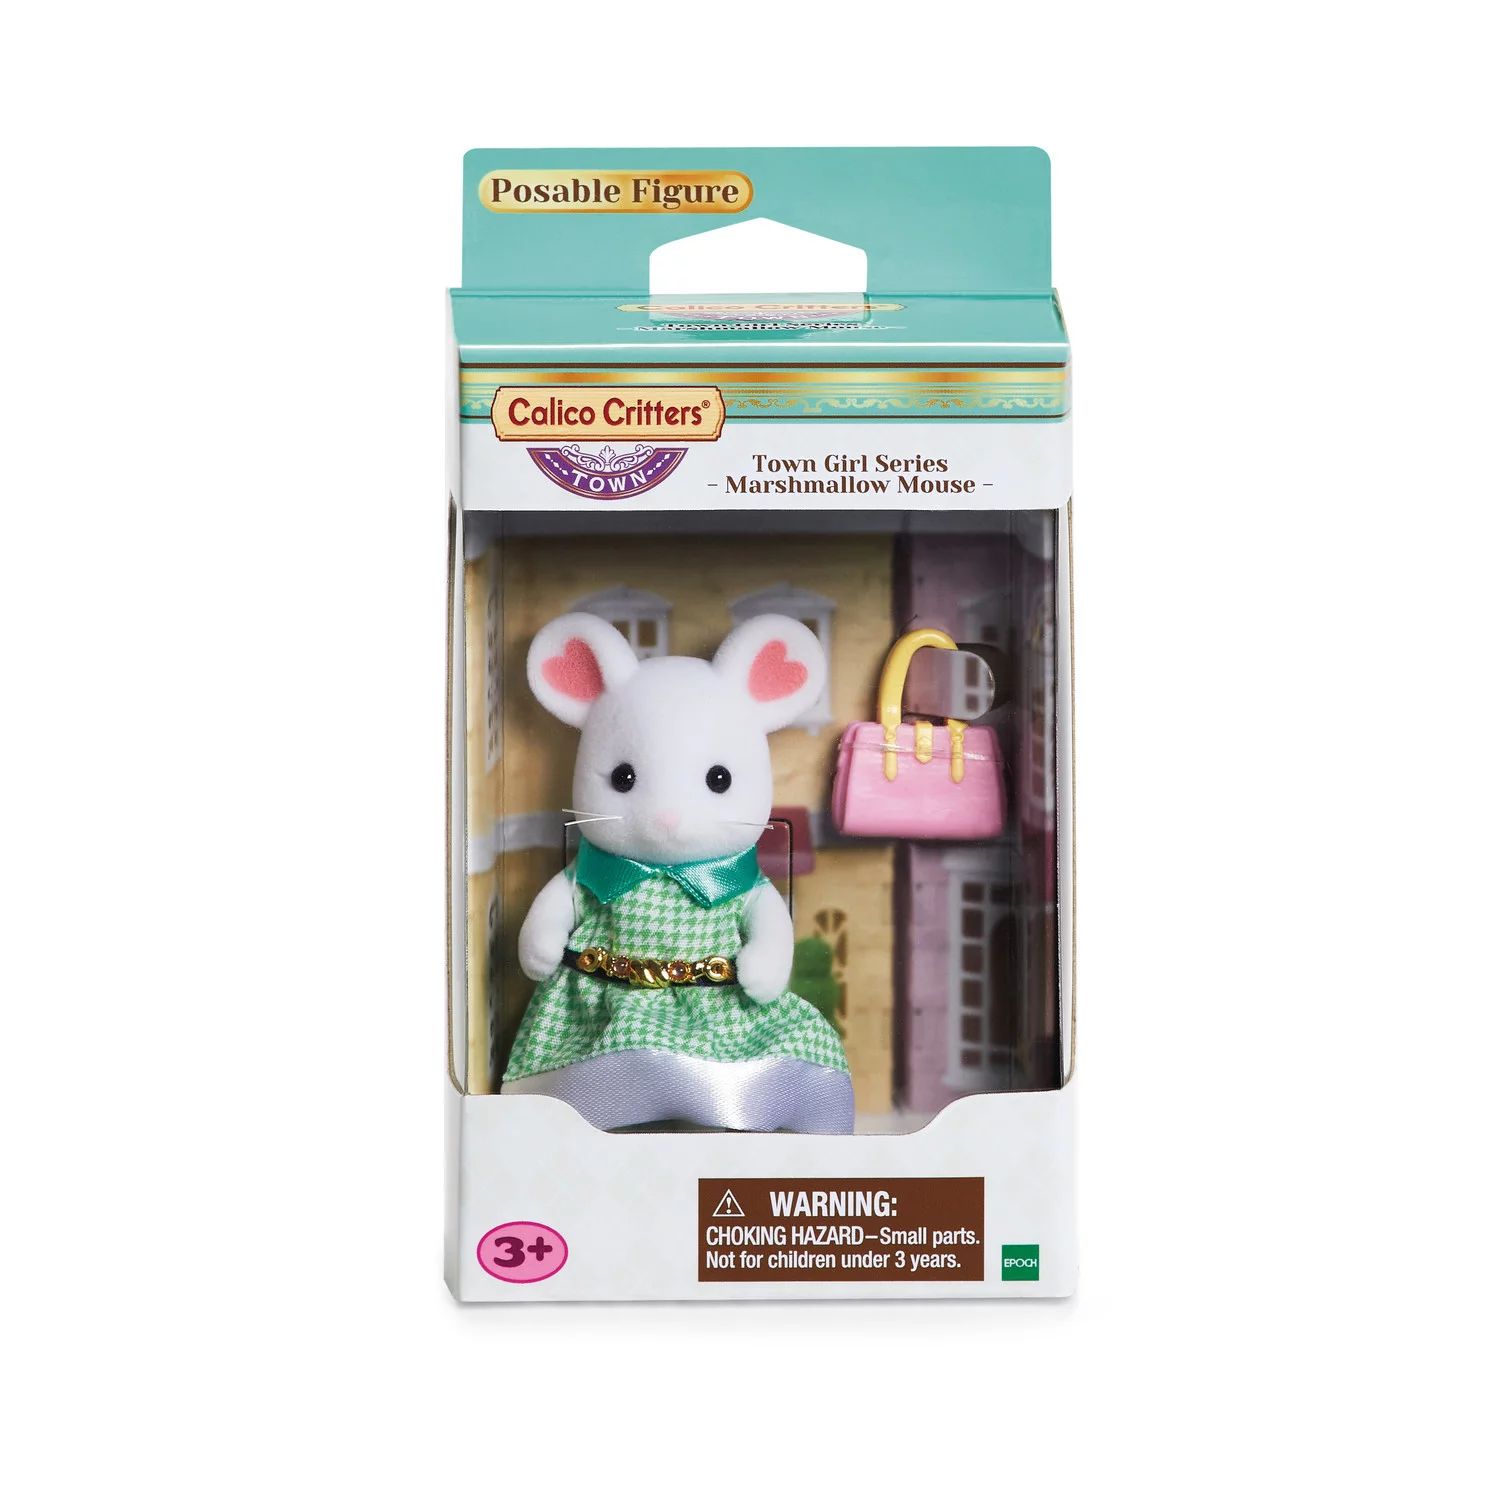 Коллекционная фигурка куклы Calico Critters Town серии Marshmallow Mouse с модными аксессуарами Calico Critters